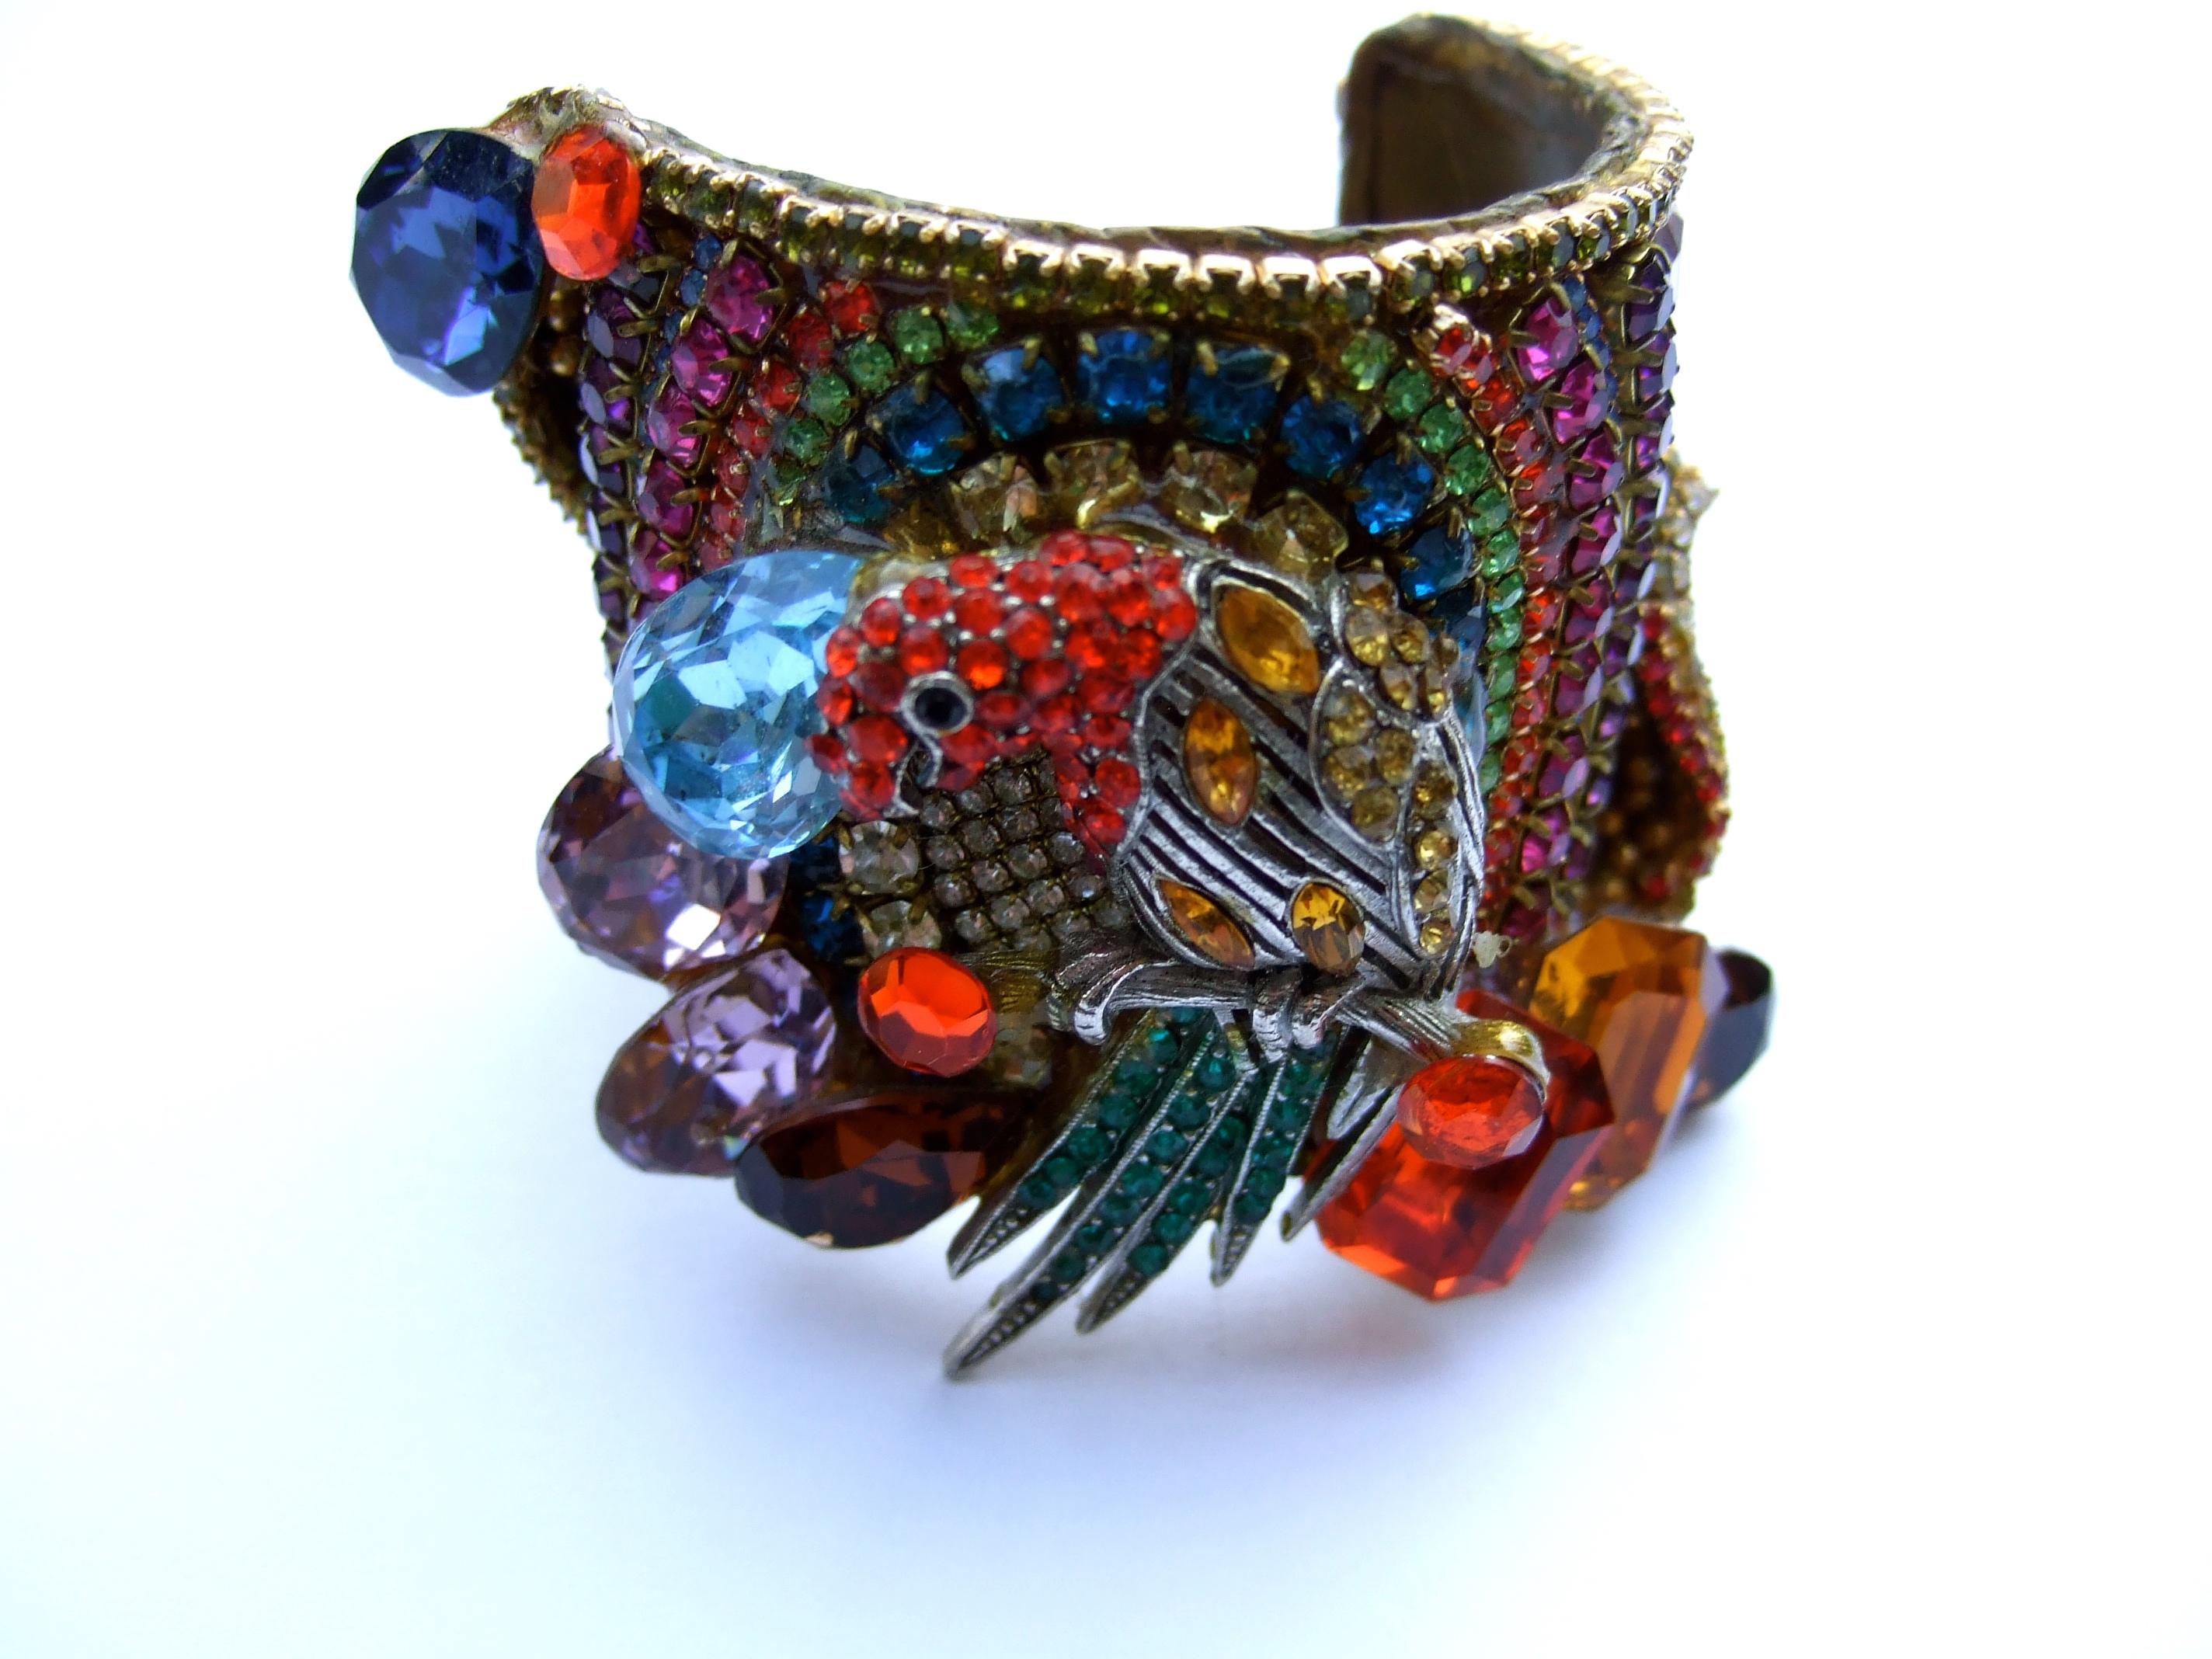 Wendy Gell Massive Crystal Encrusted Parrot Design Artisan Cuff Bracelet c 1980s 9